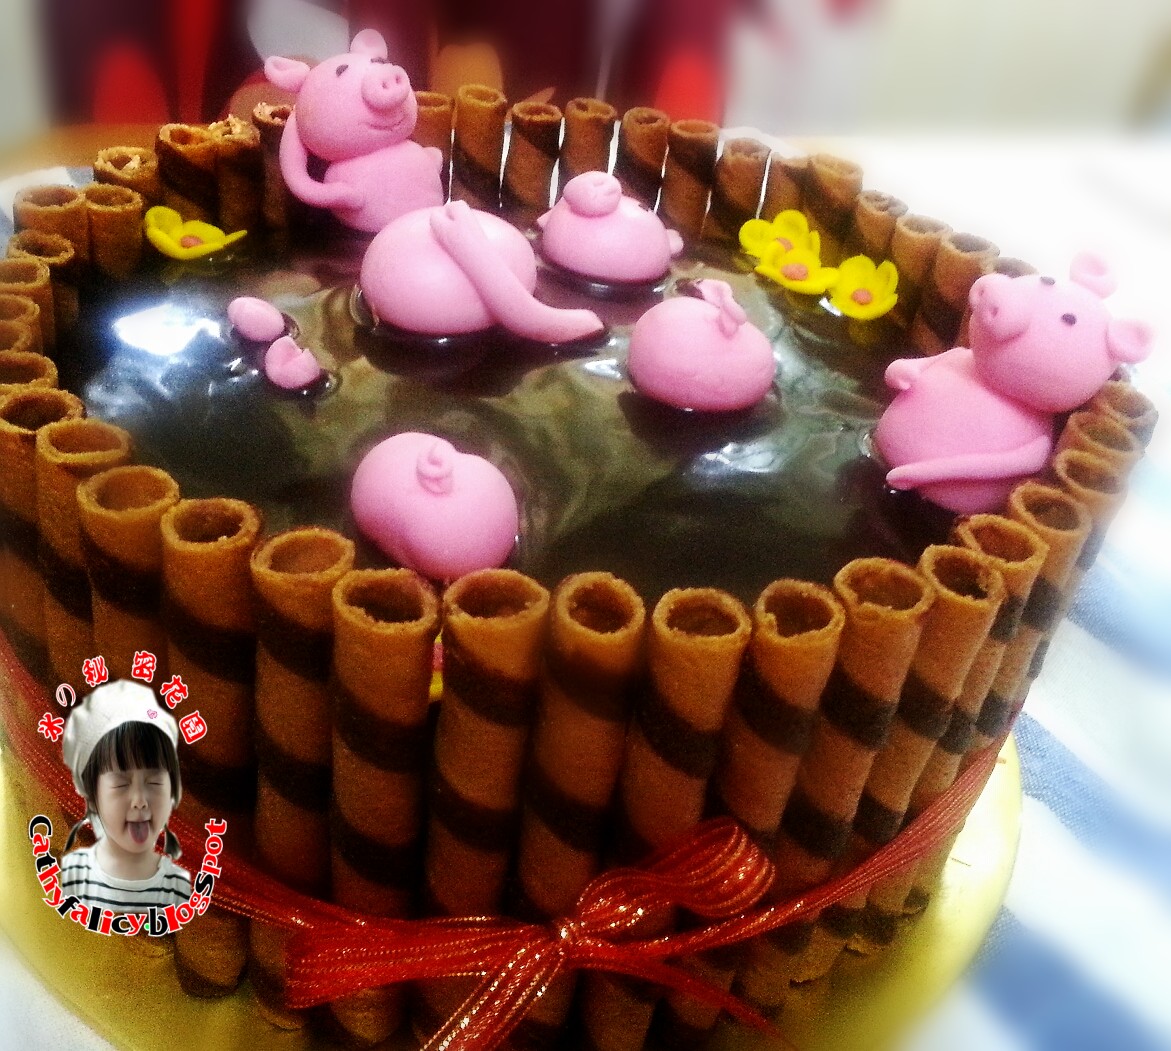 Panda's Homemade Cake: 3D 豬仔蛋糕 Piggy Cake